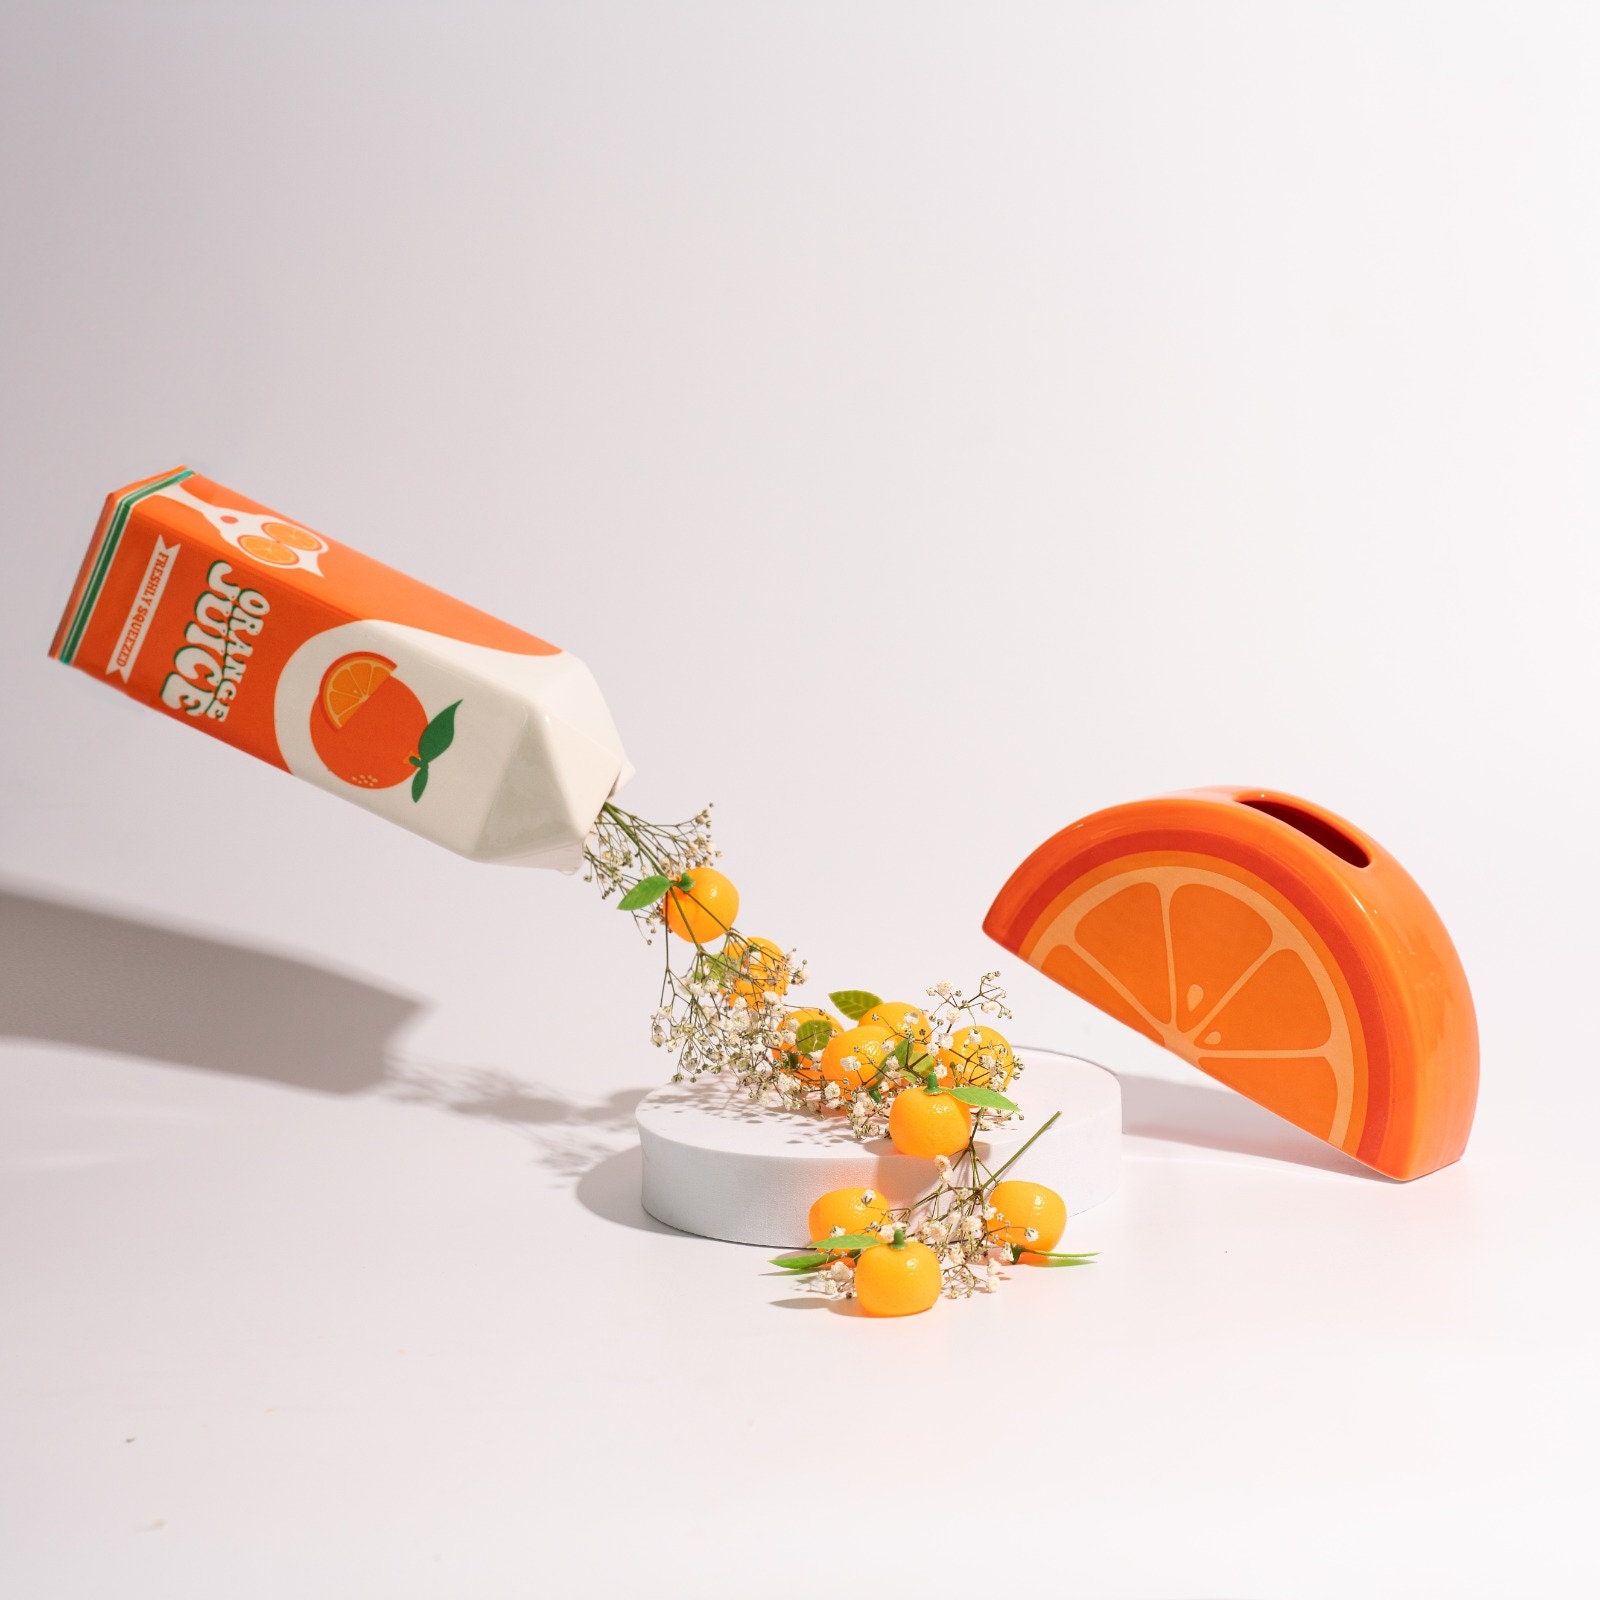 Lenor Decor Orange Juice Vase, 2 Vase Set. Ceramic Carton Vase and Sli